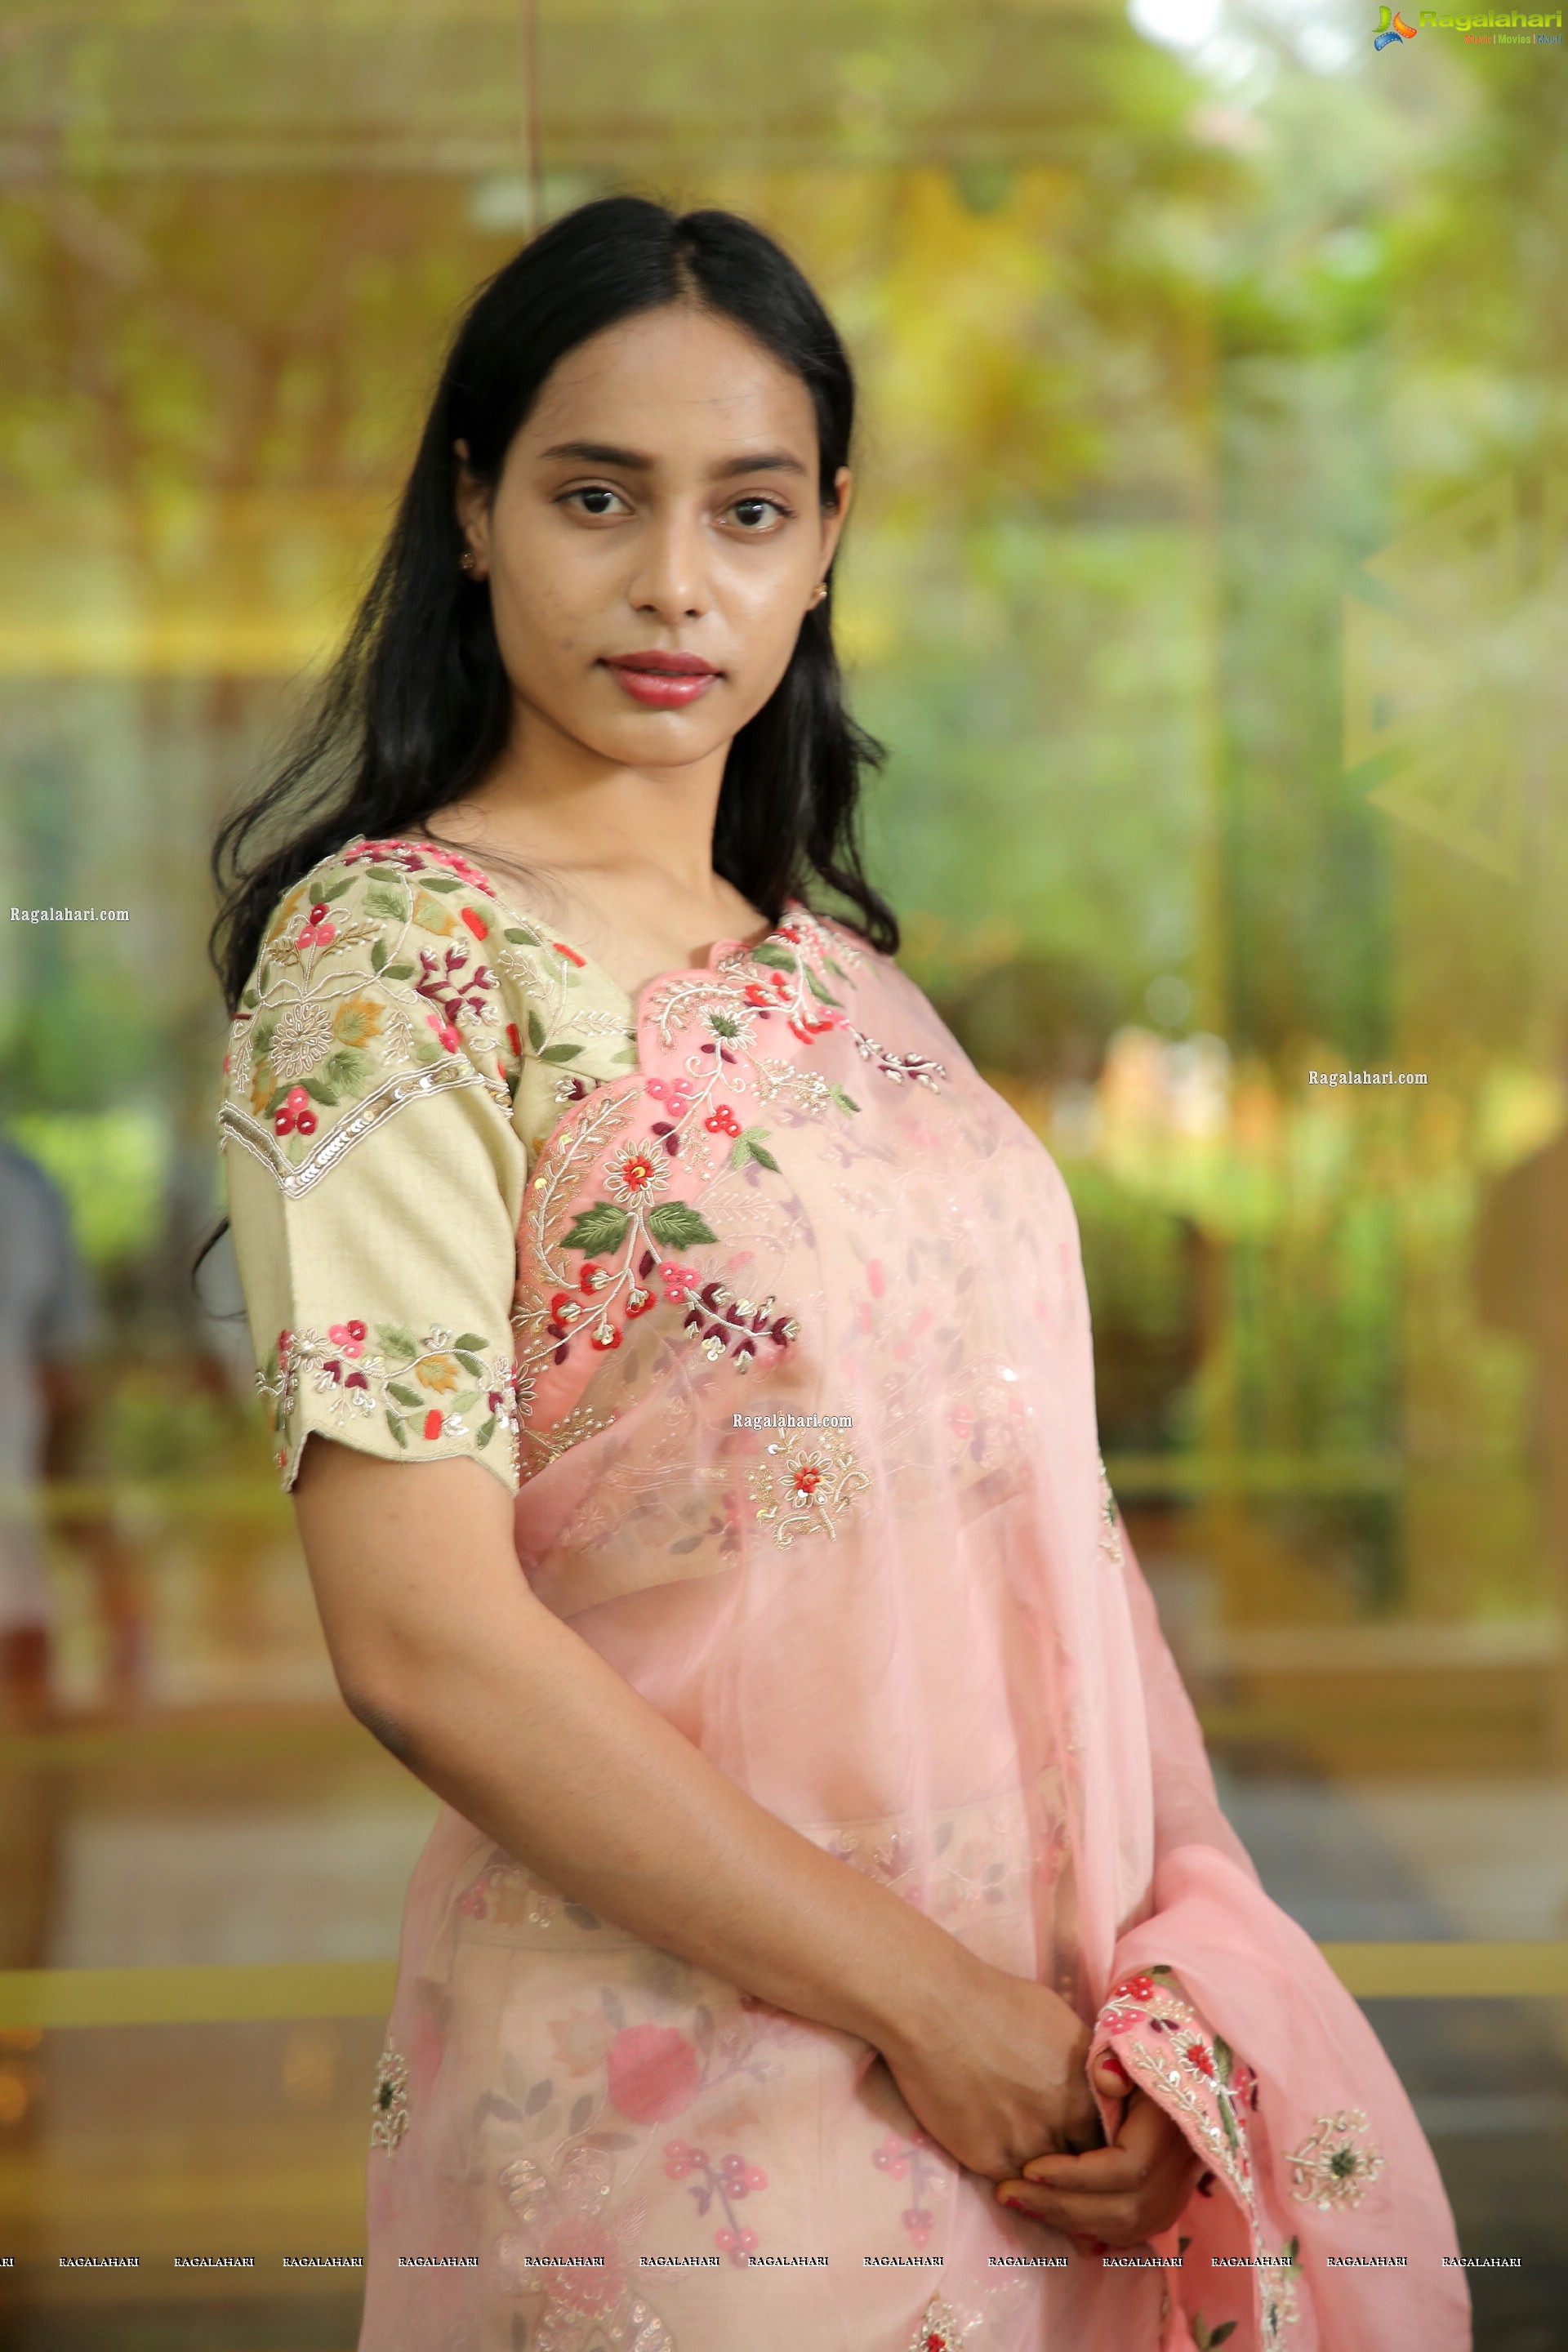 Model Farida in Designer Lehenga Choli, HD Photo Gallery